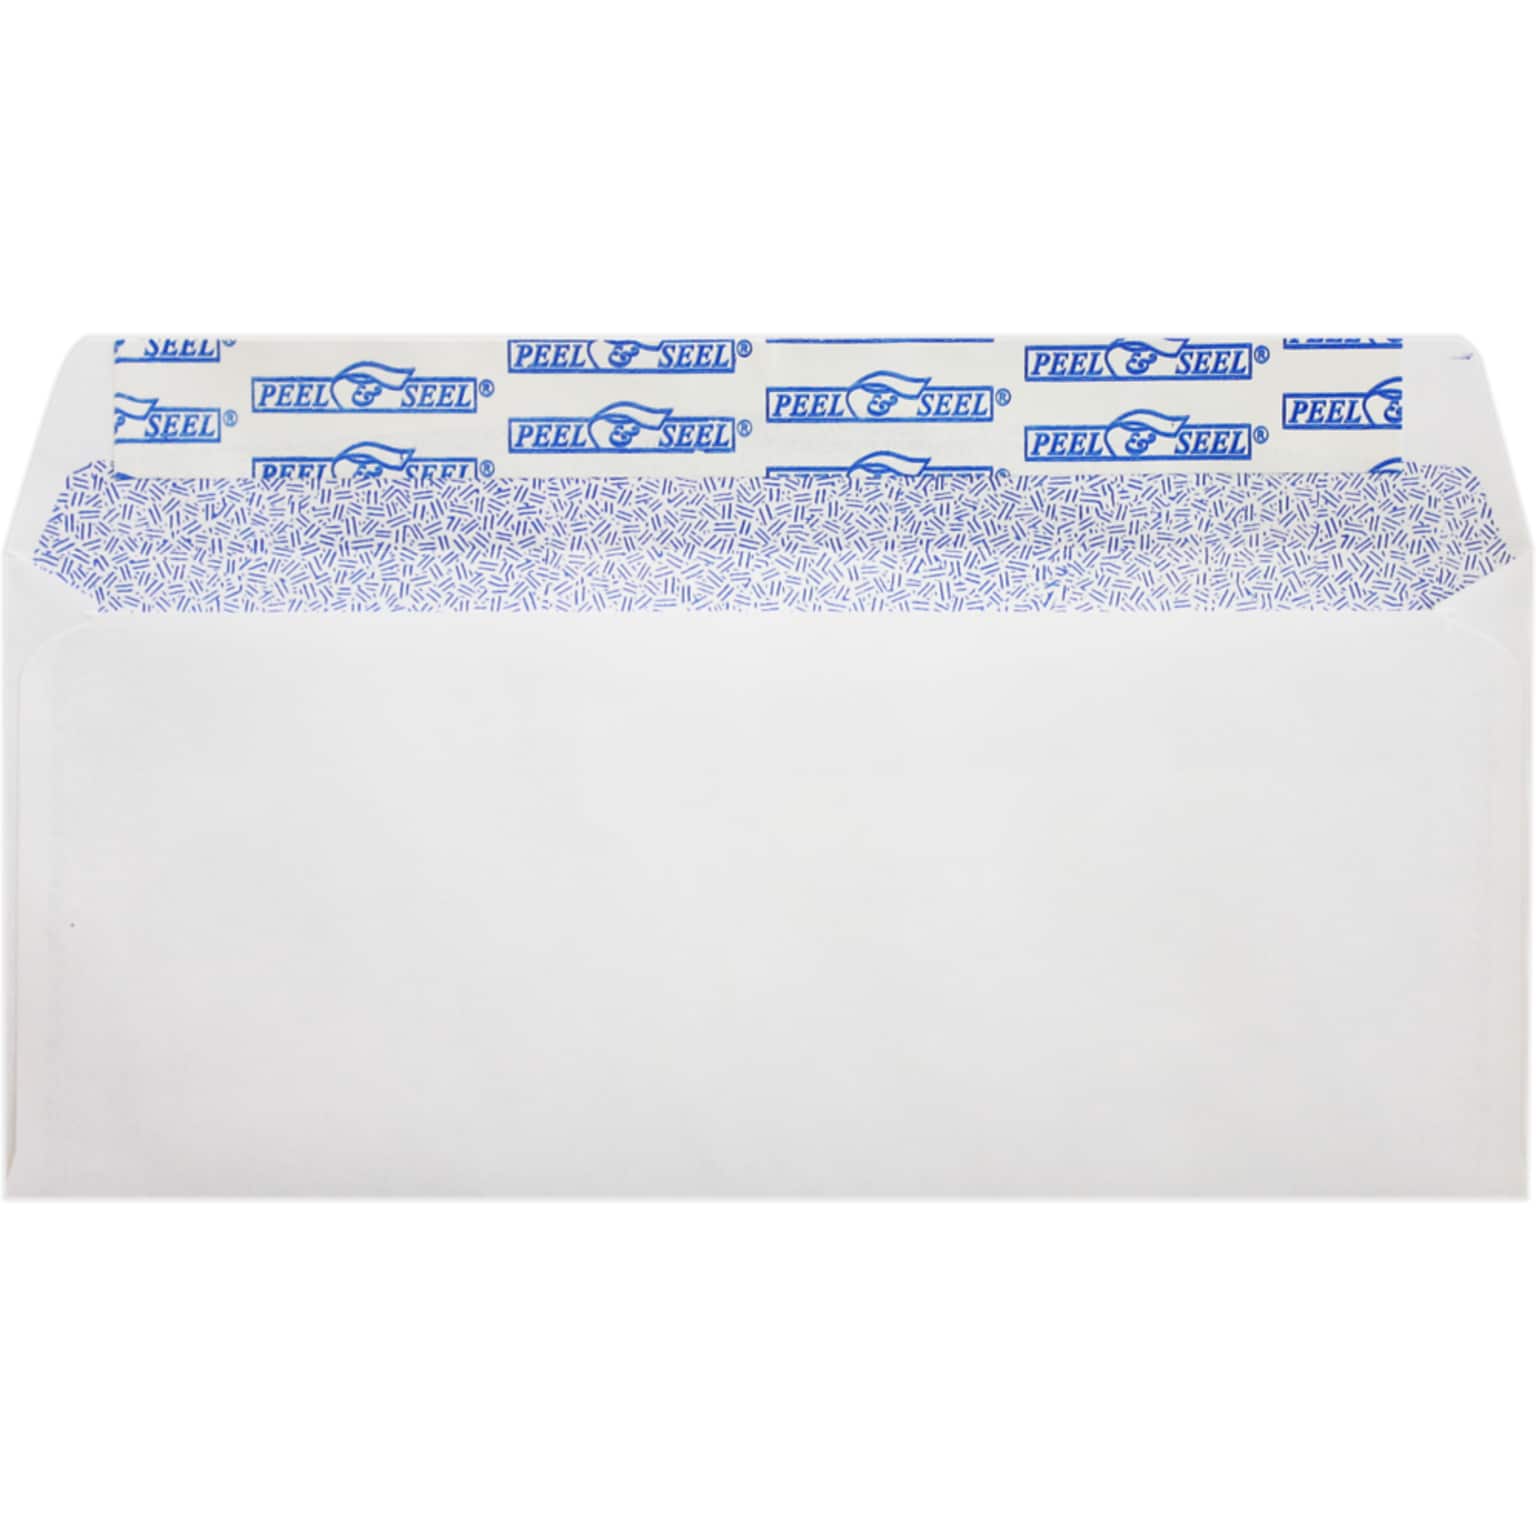 JAM Paper #10 Regular Envelopes, Peel & Press, Security Tint, 24lb, 4 1/8 x 9 1/2, White Wove, 1000 Pack (75747-1M)